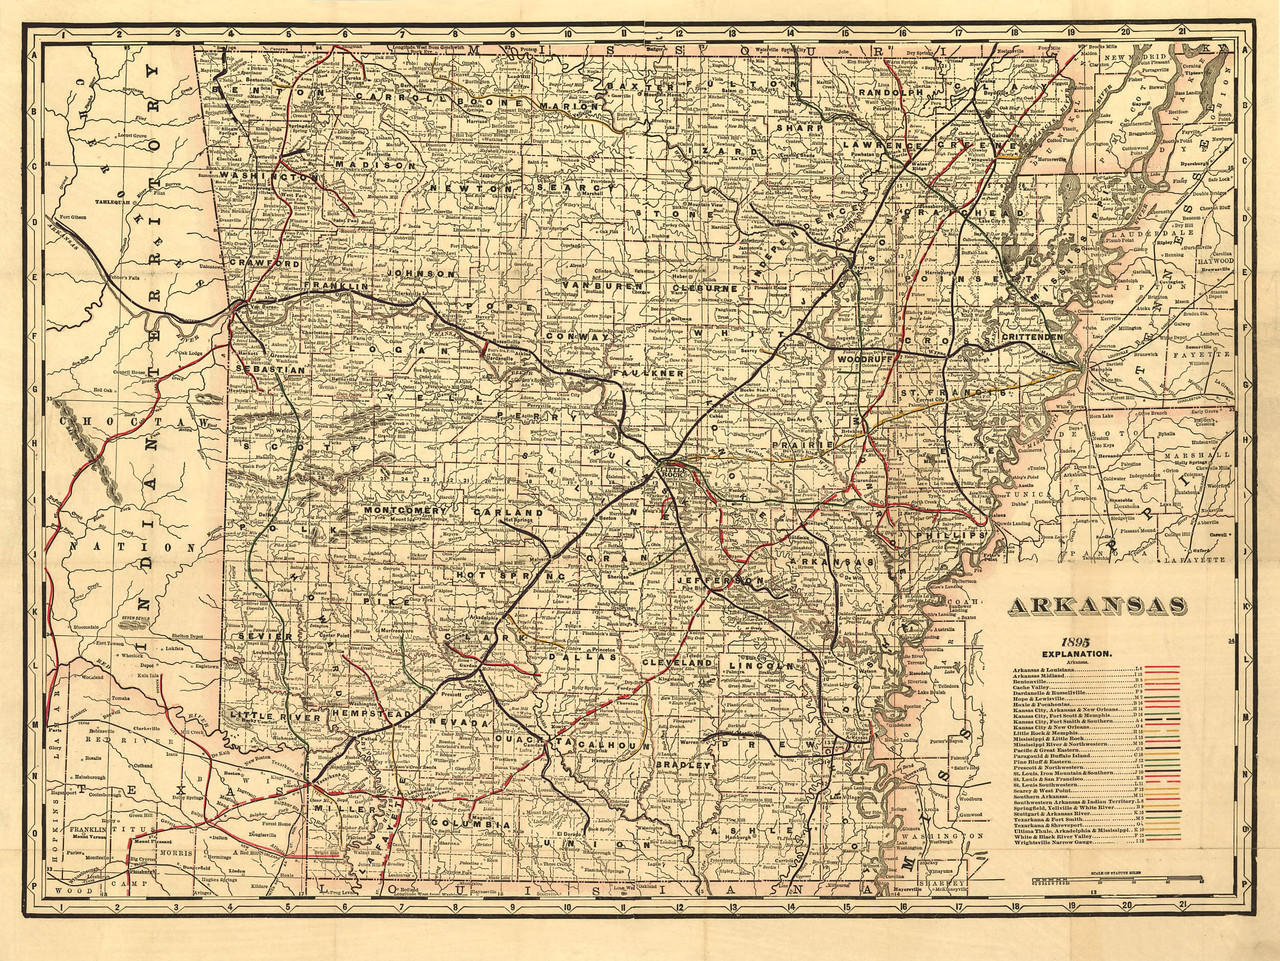 New Rail Road and County Map of Arkansas, Louisiana & Mississippi